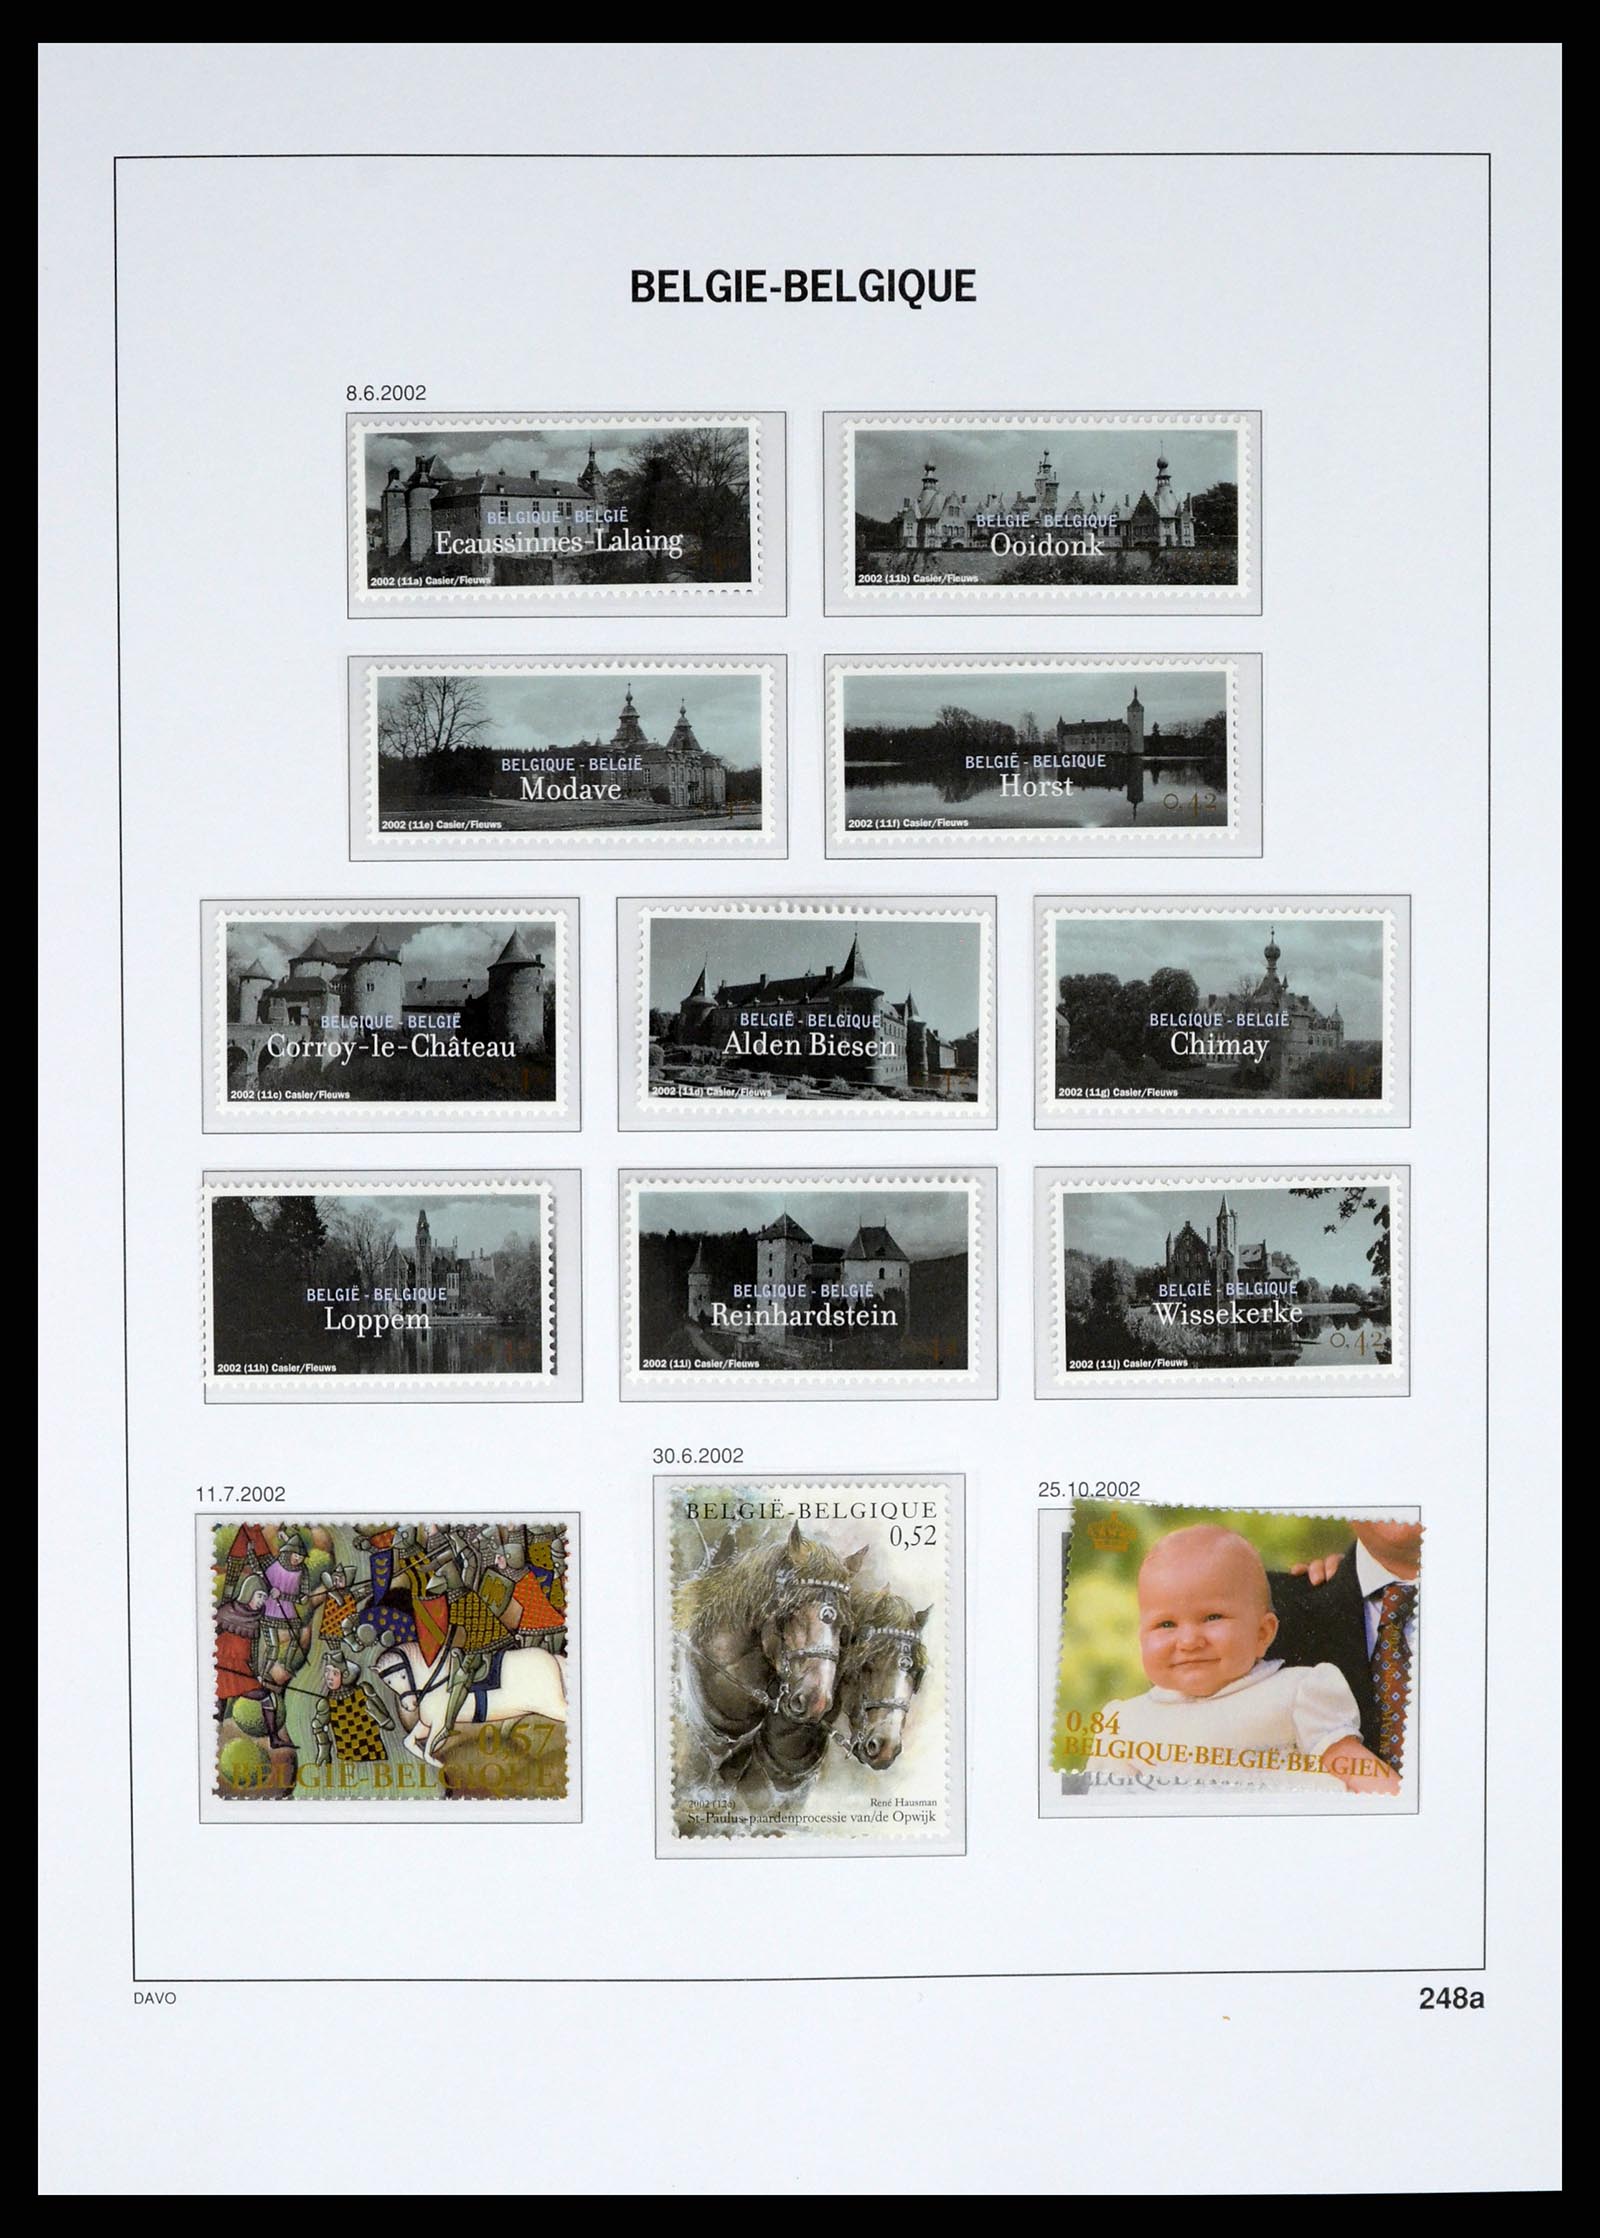 37368 192 - Stamp collection 37368 Belgium 1969-2003.